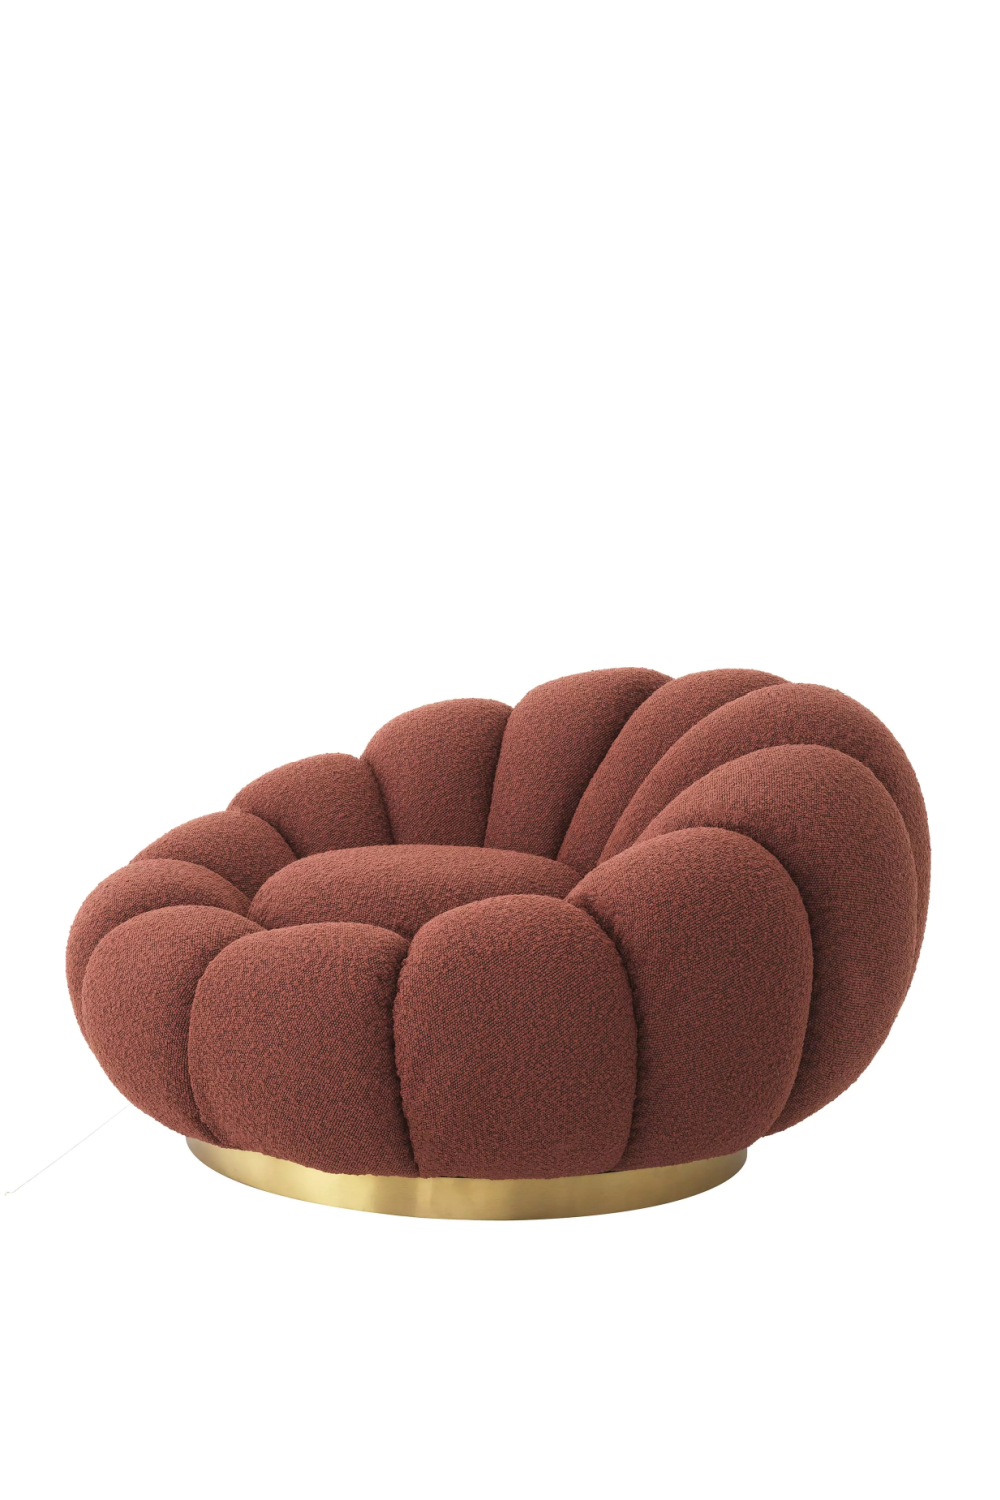 Flower Design Swivel Chair | Eichholtz Mello | Oroa.com